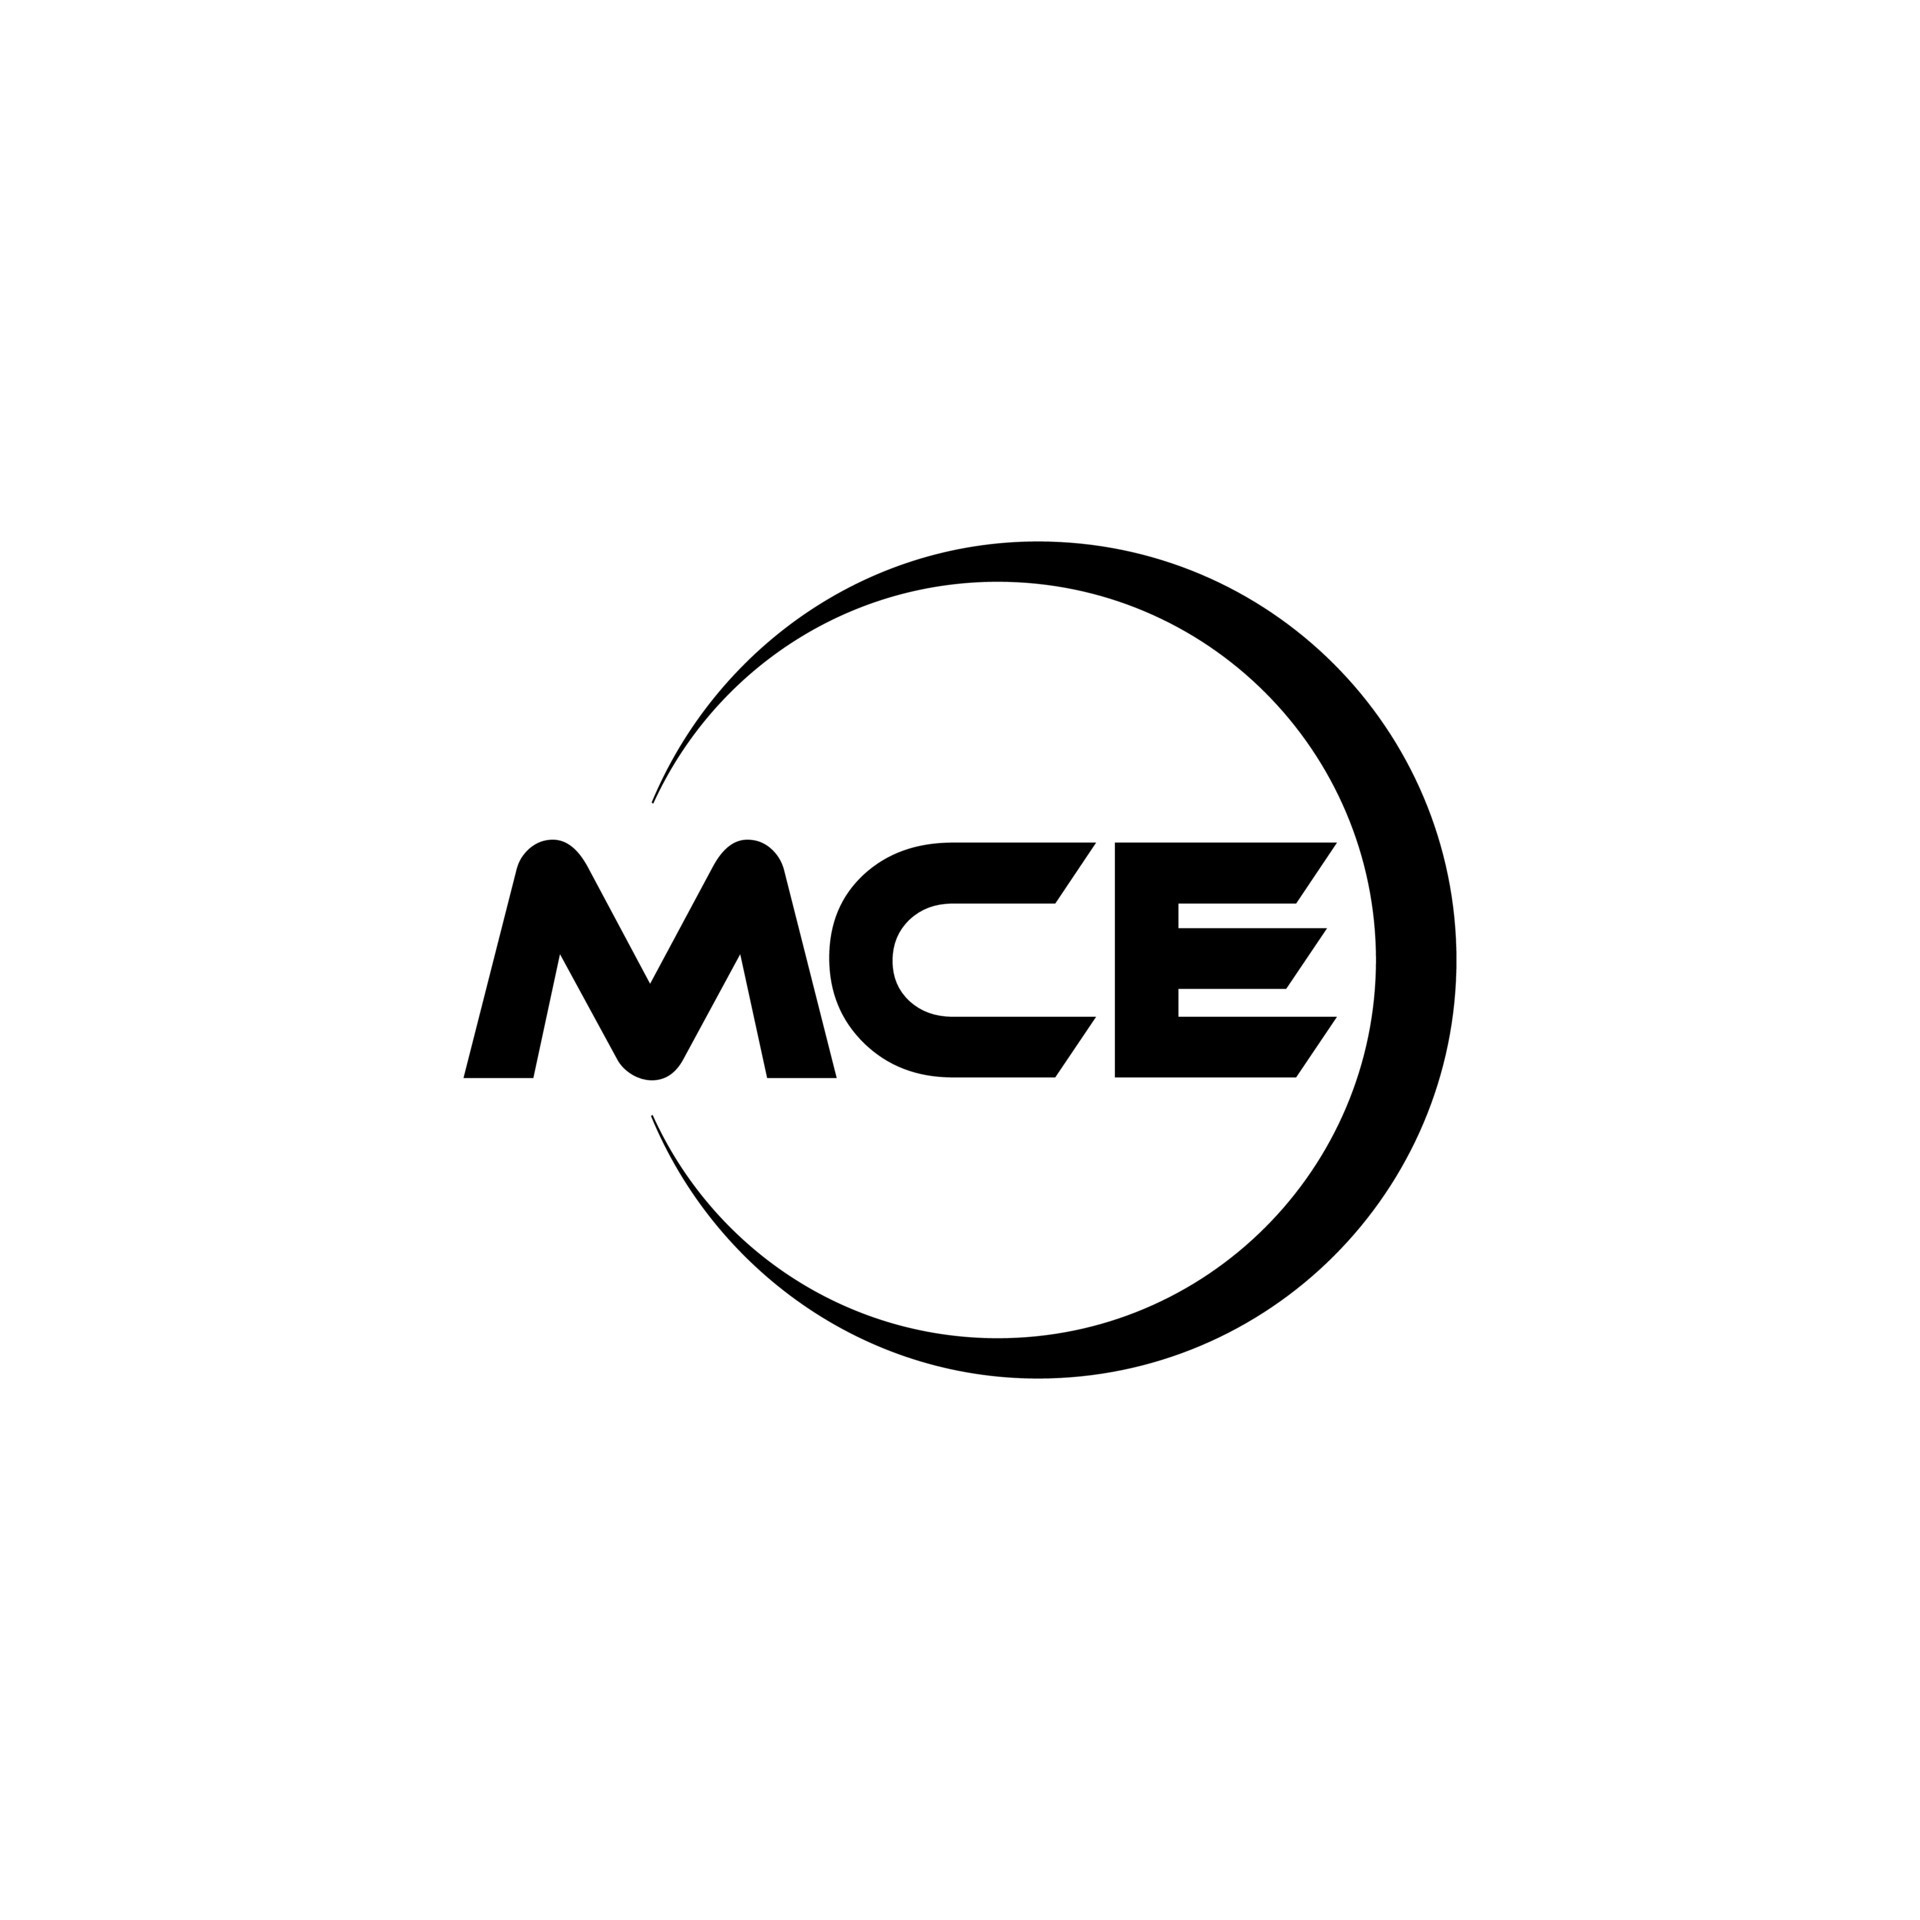 Mce Letter Logo Design In Illustration Vector Logo Calligraphy